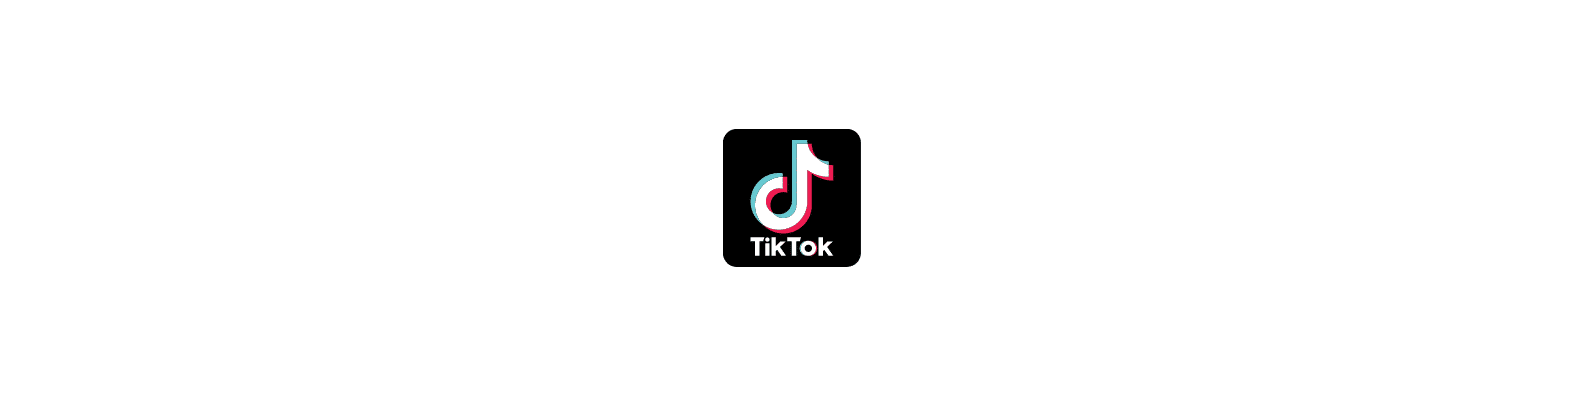 Intro_TikTok